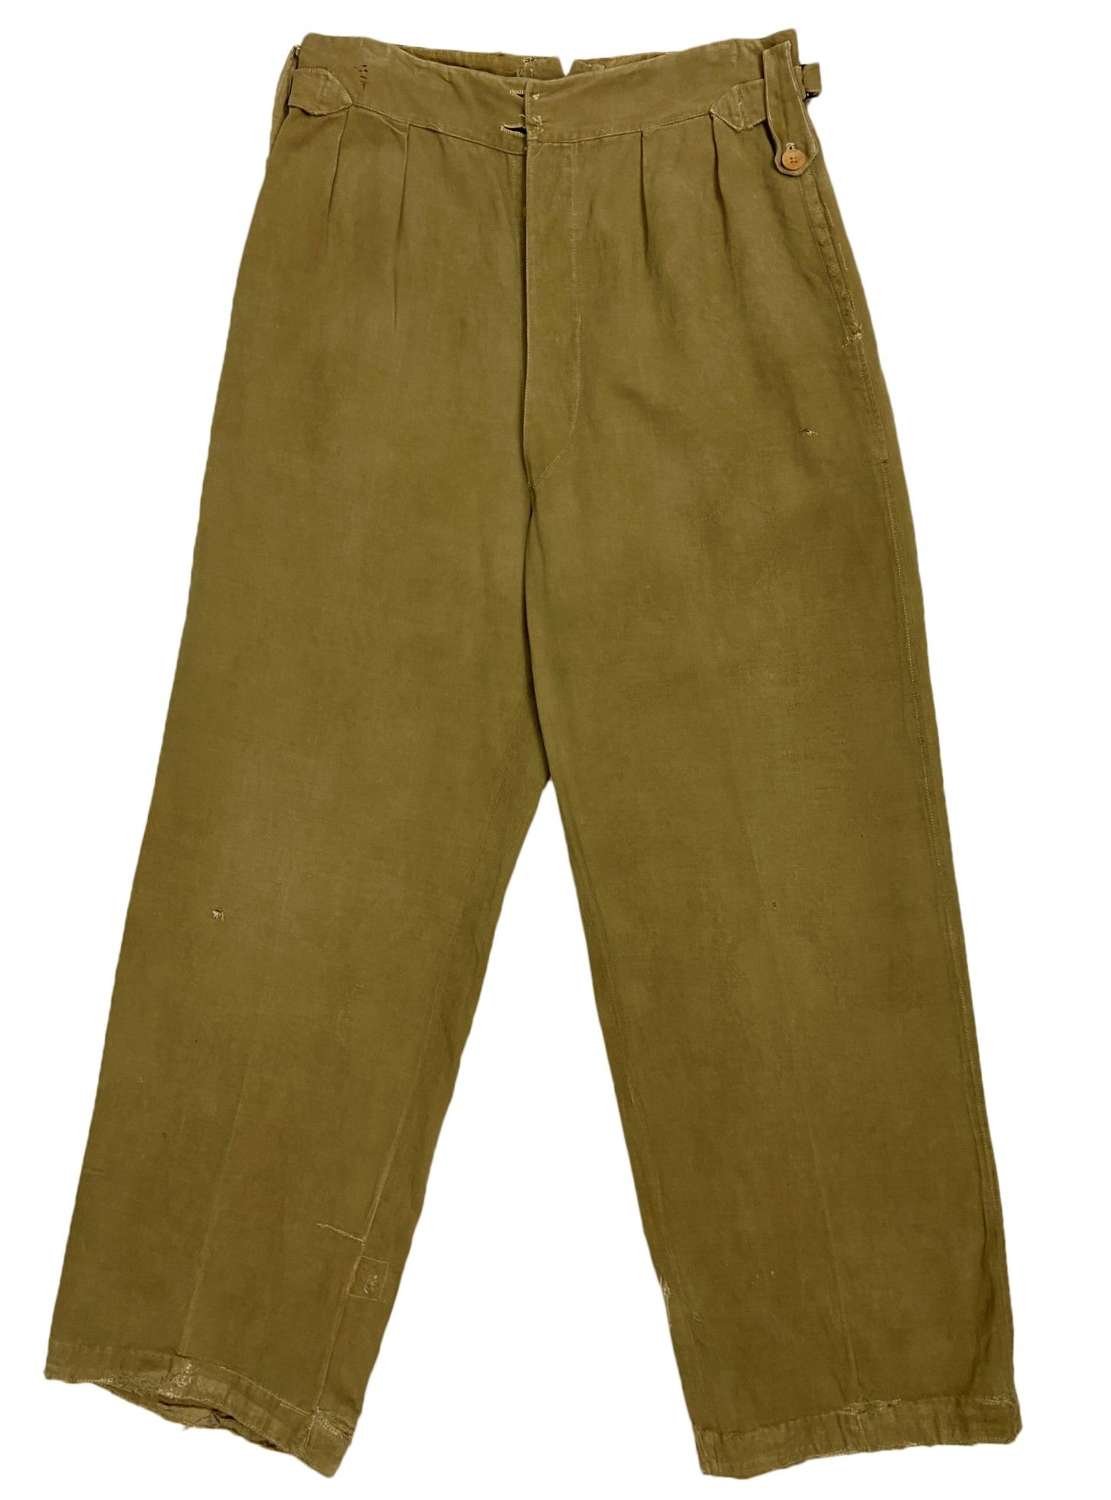 Original 1940s British Khaki Drill Trousers - 30 x 29